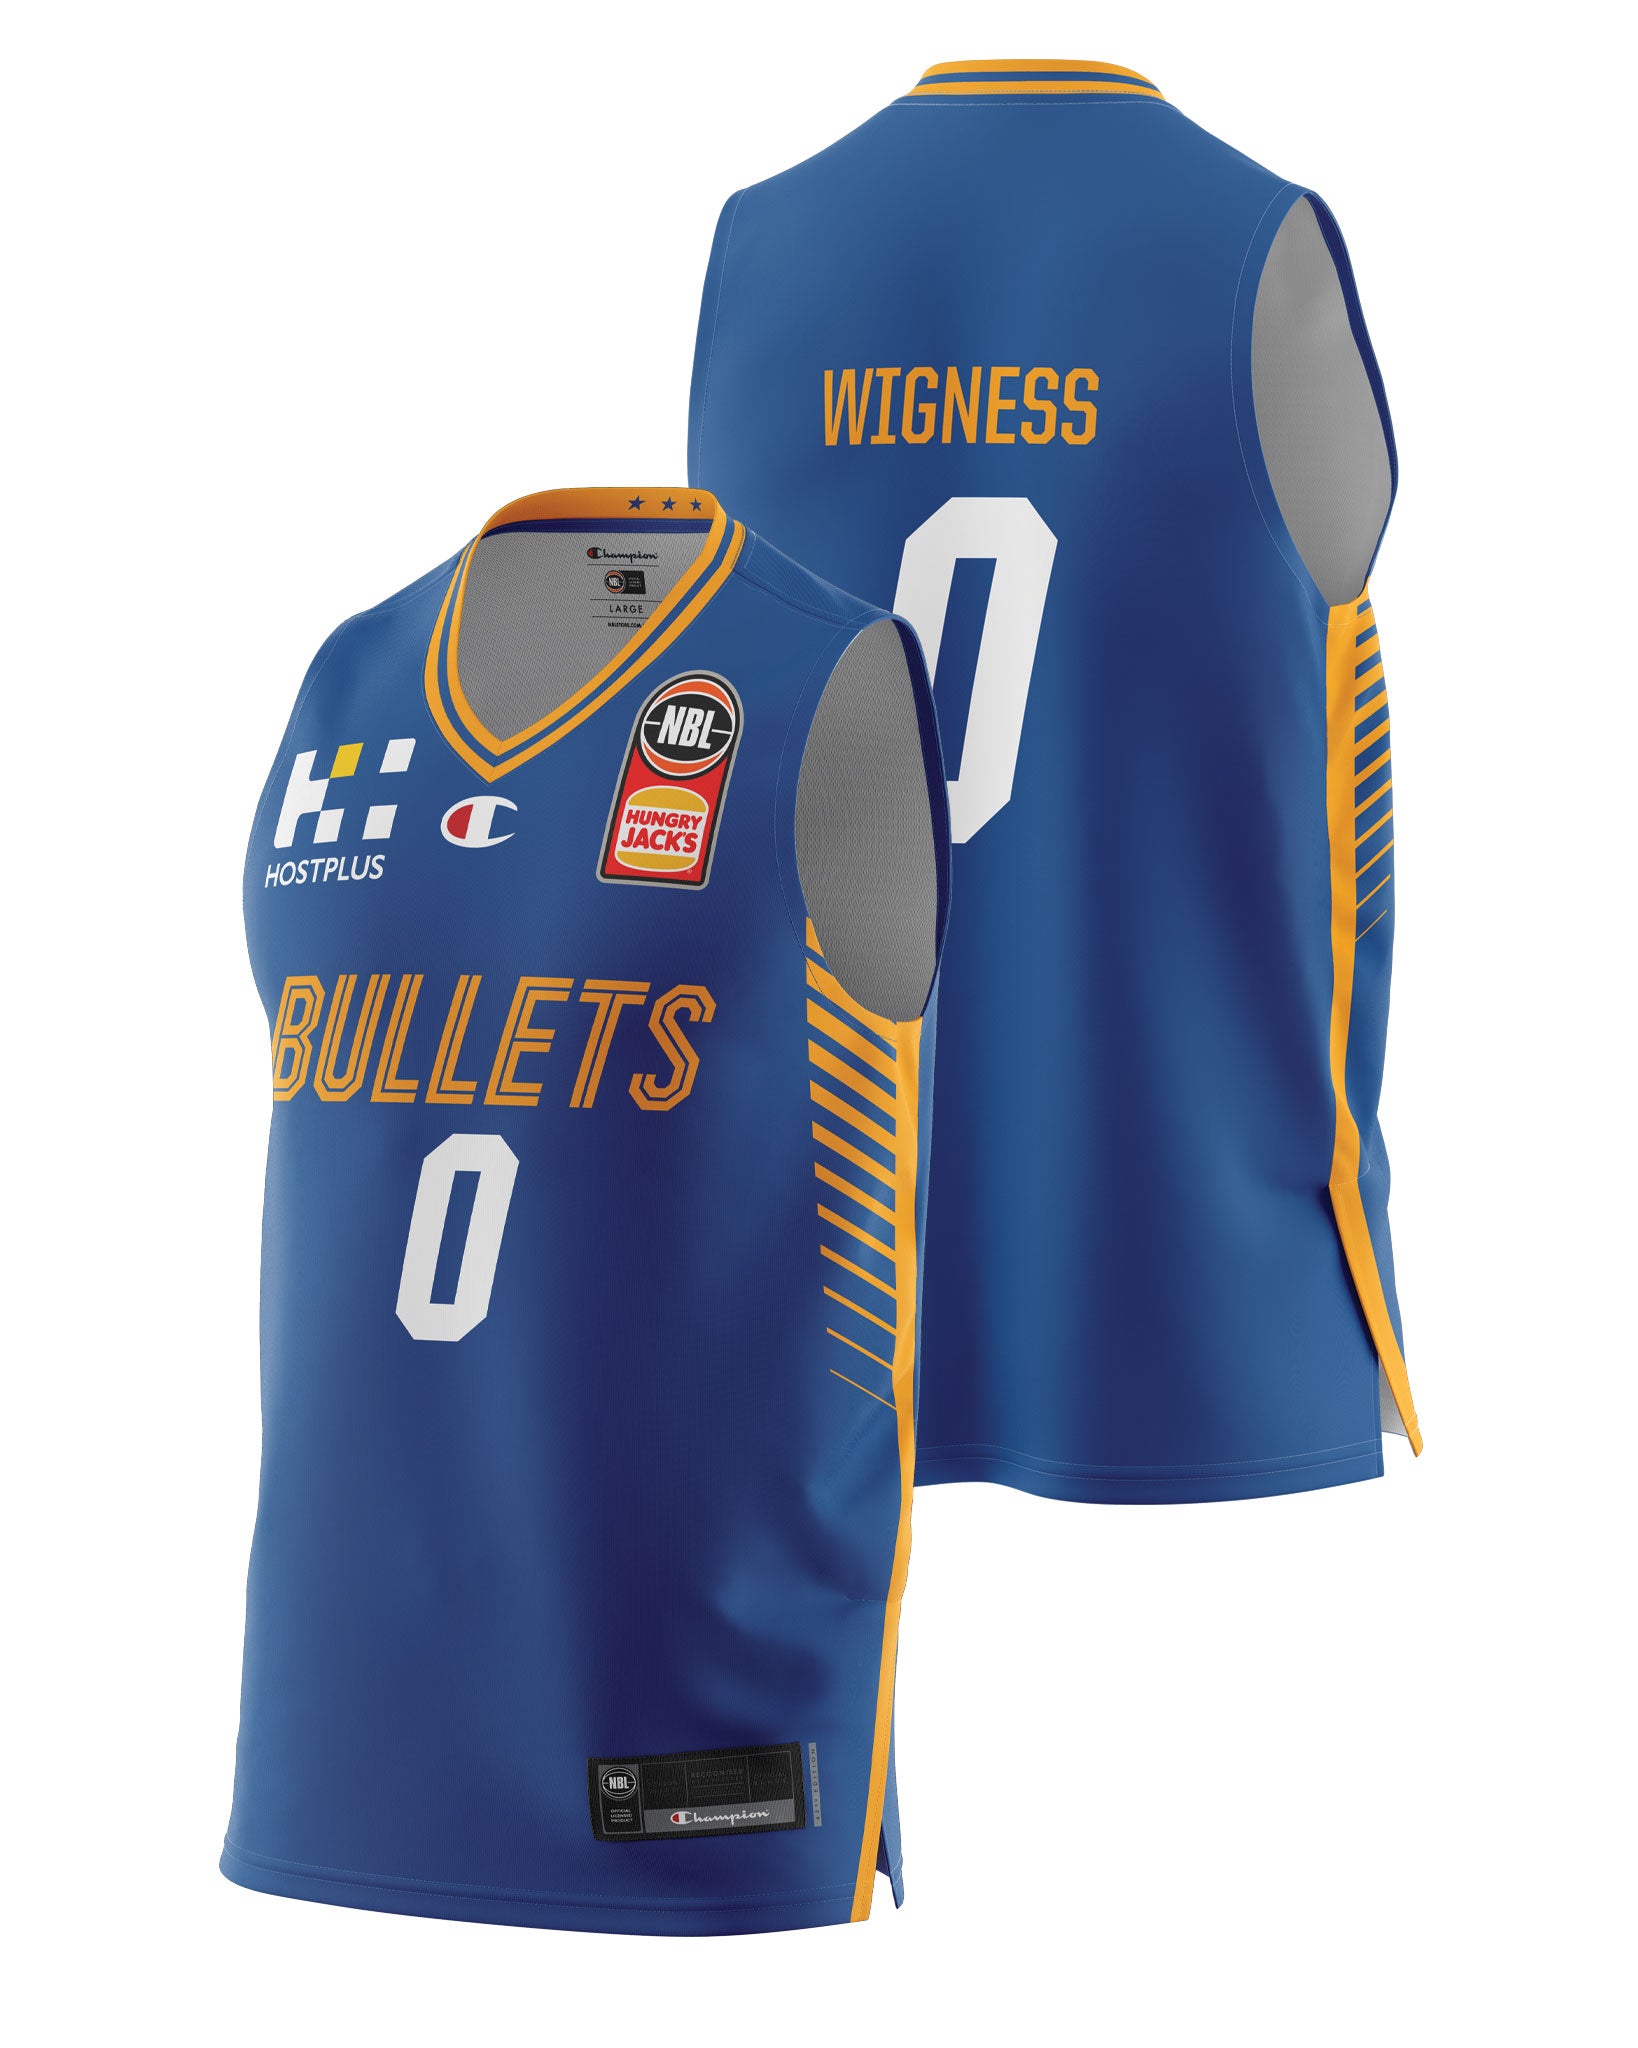 Brisbane Bullets 20/21 Authentic Home Jersey - Tamuri Wigness